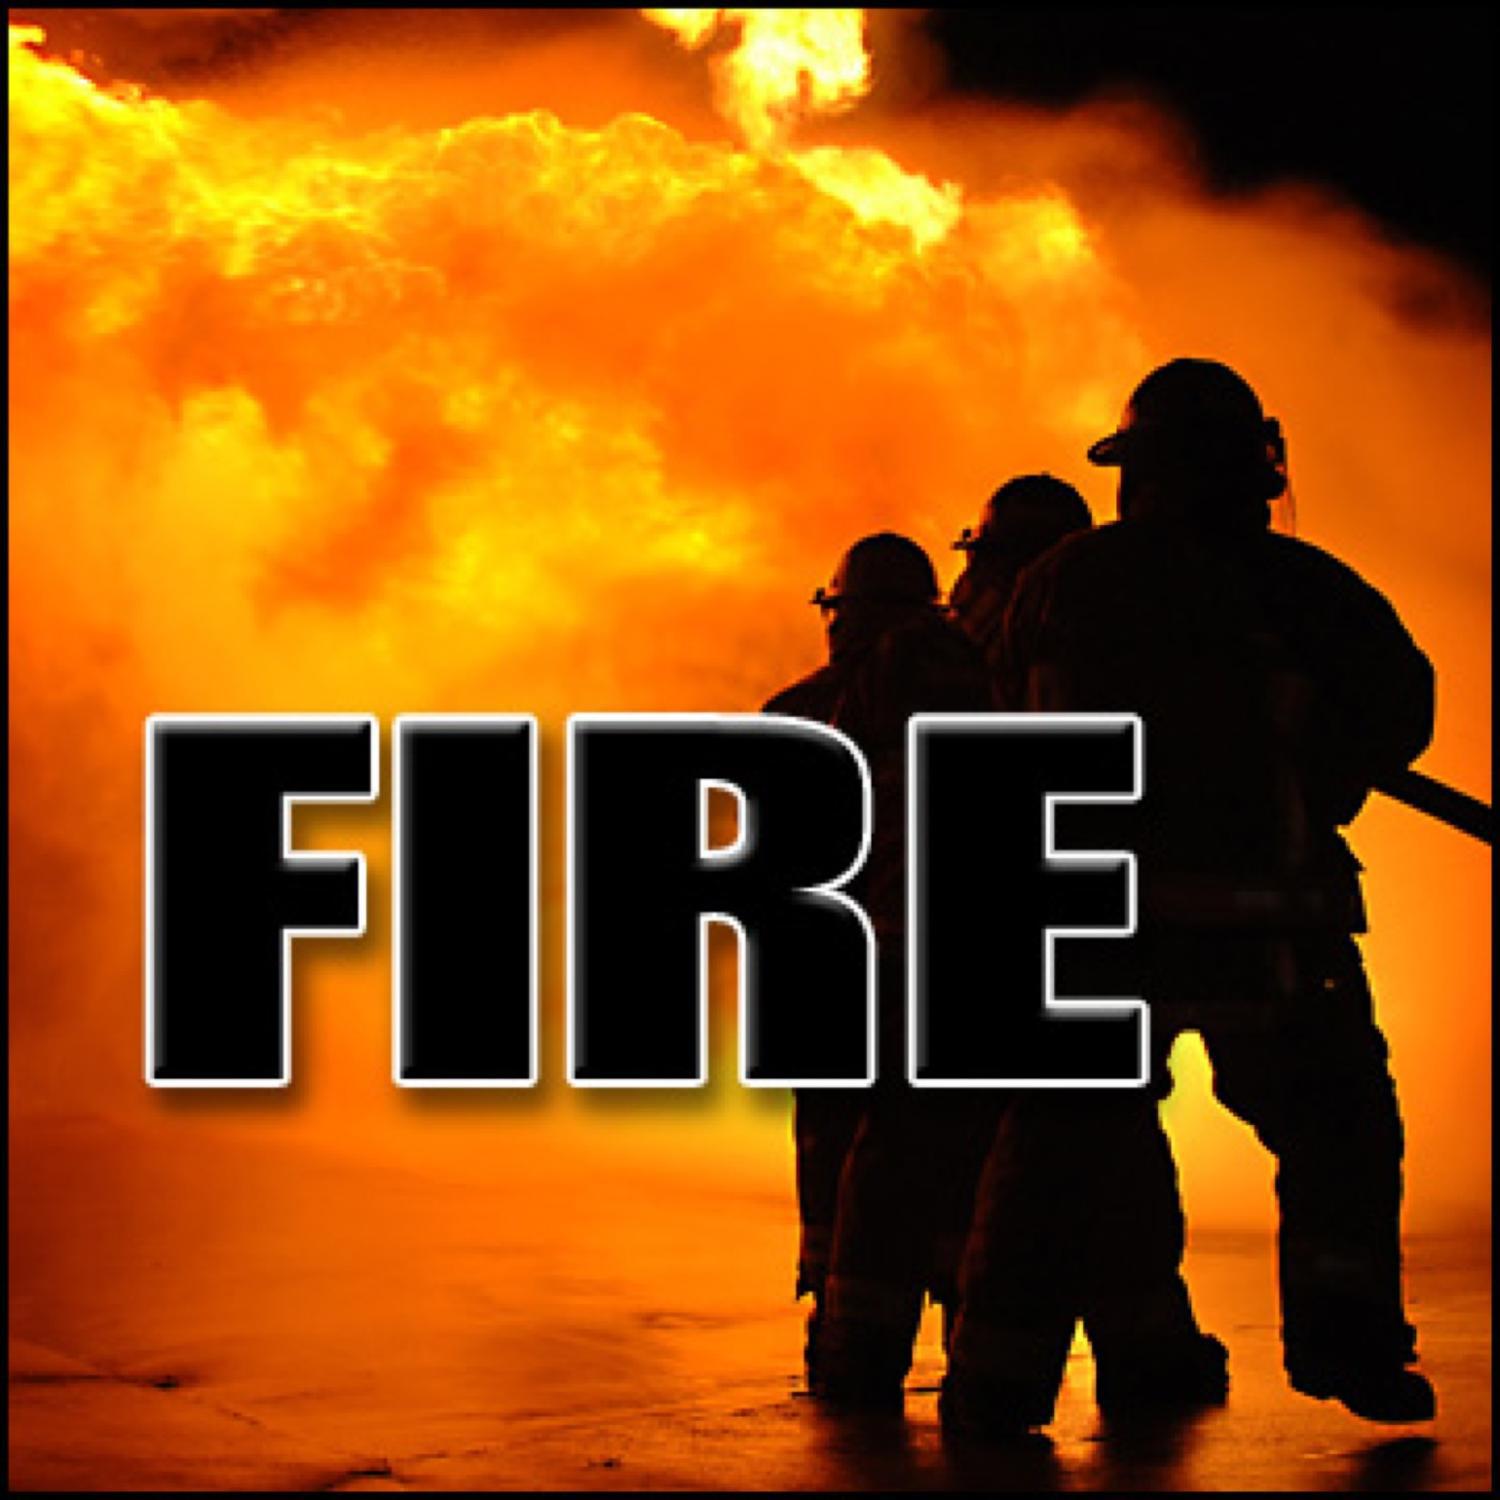 Fire - Wood Fire: Heavy Crackling Fire Scenes, Fires & Flames